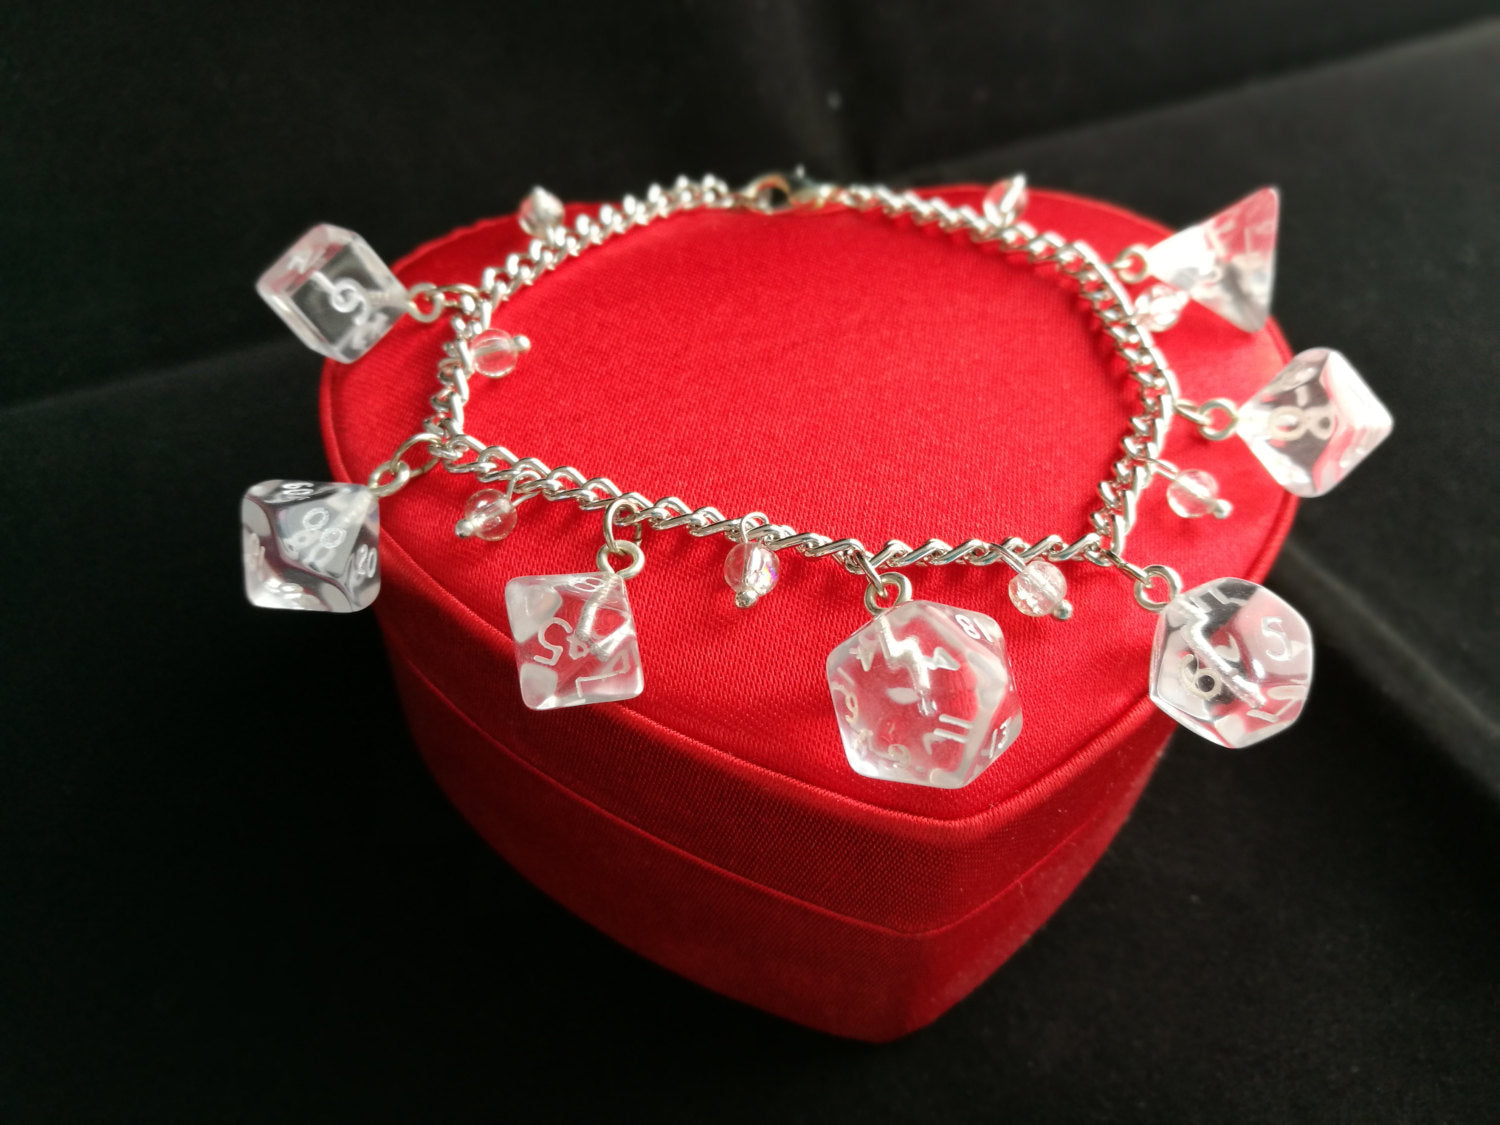 Blue Gem Mini Polyhedral Dice Charm Bracelet – Miss Moonshines Makes